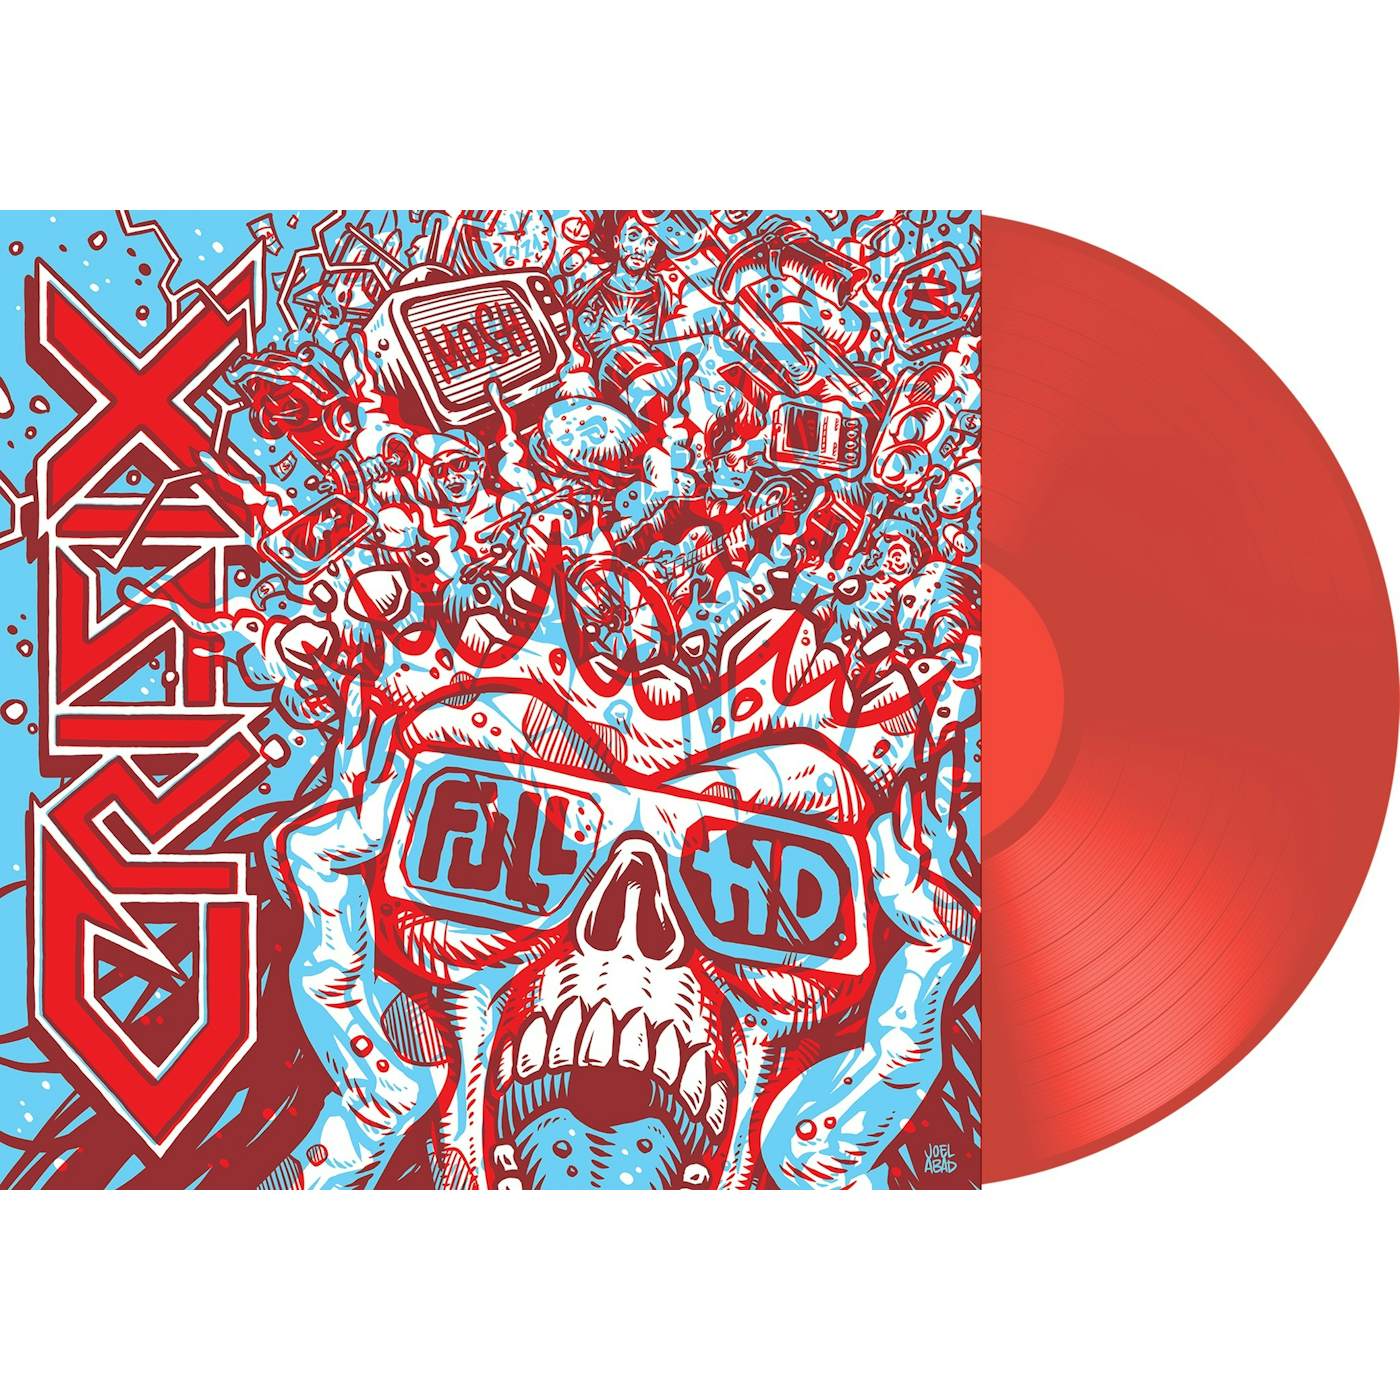 Crisix Ful Hd (Red) Vinyl Record